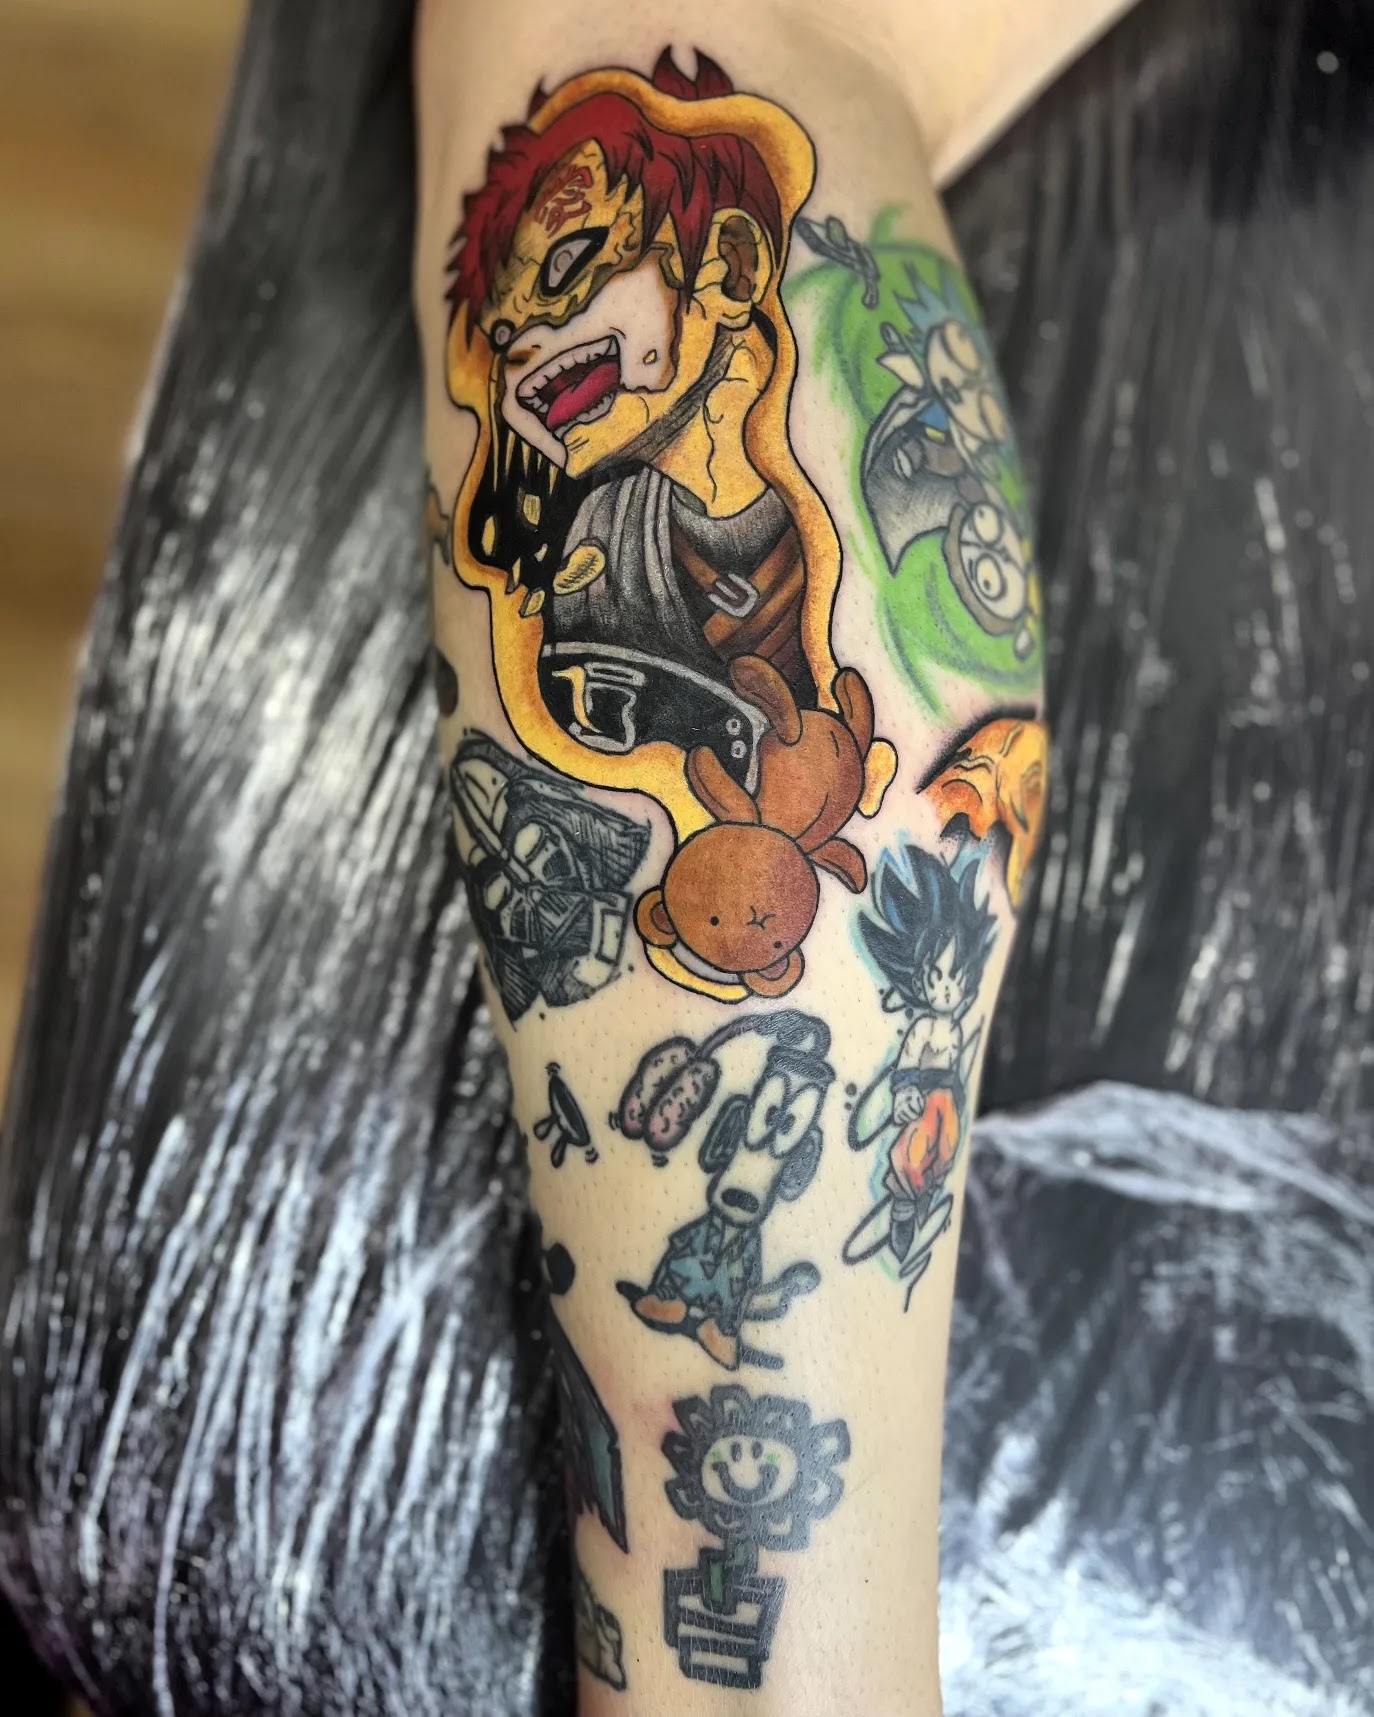 Monkey Island: Tattoo